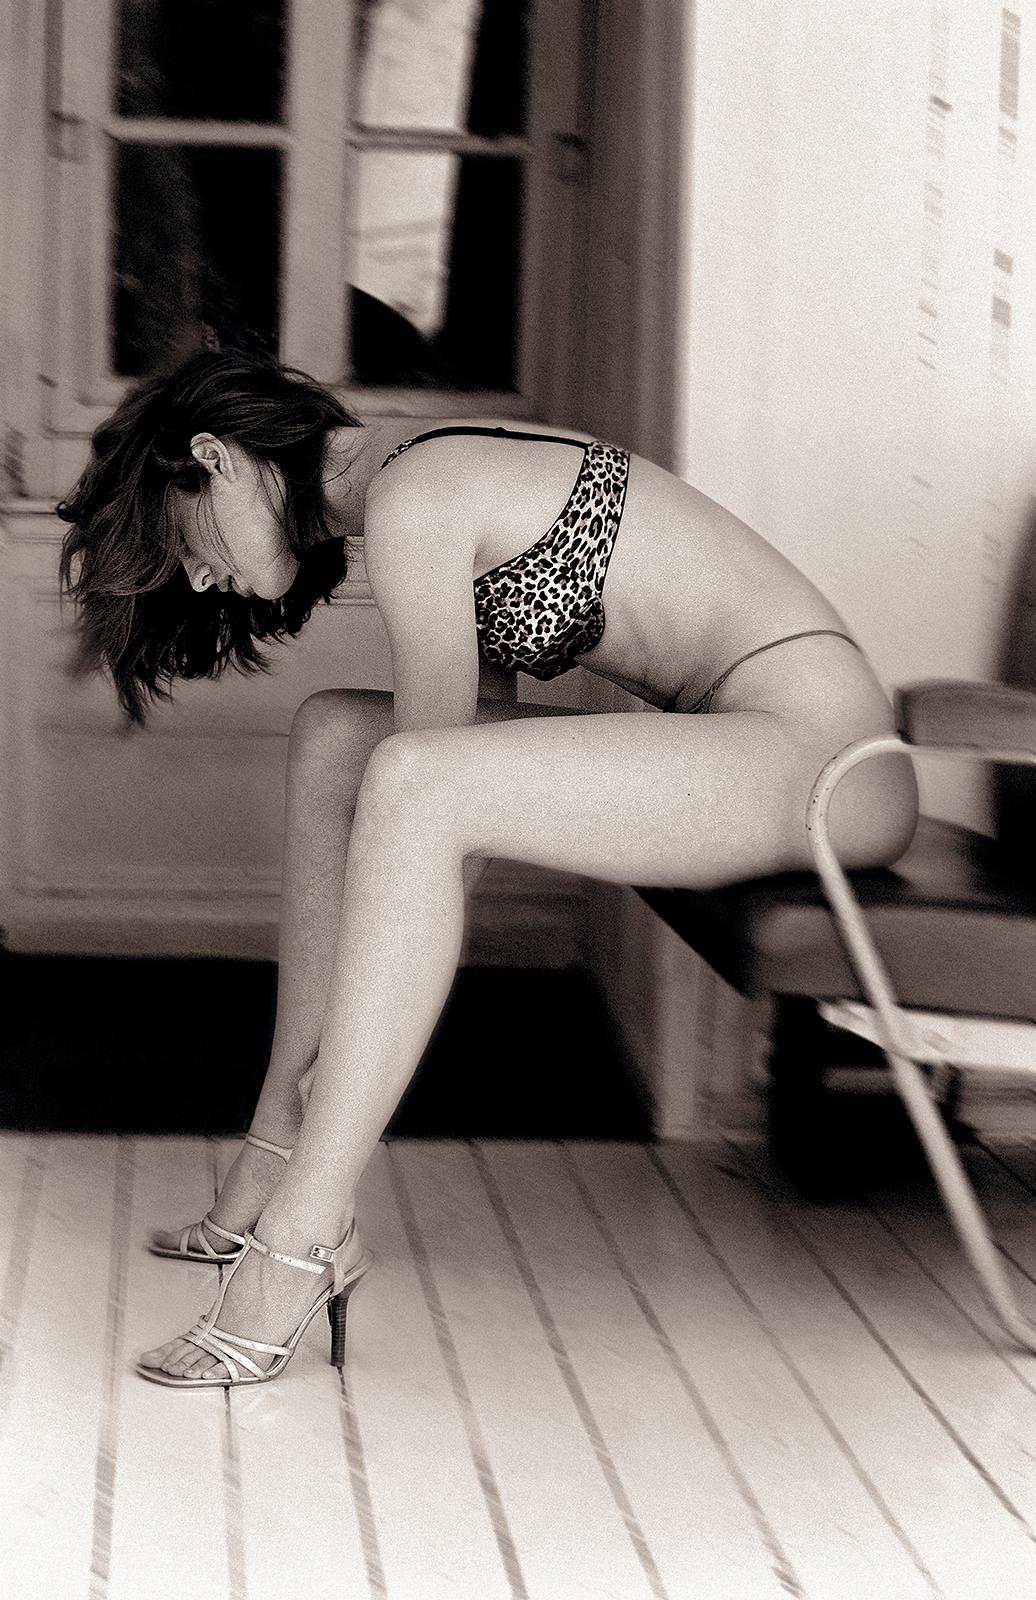 Ian Sanderson Figurative Photograph - Ariane -Signed limited edition semi nude print, Black white photo, Sexy model